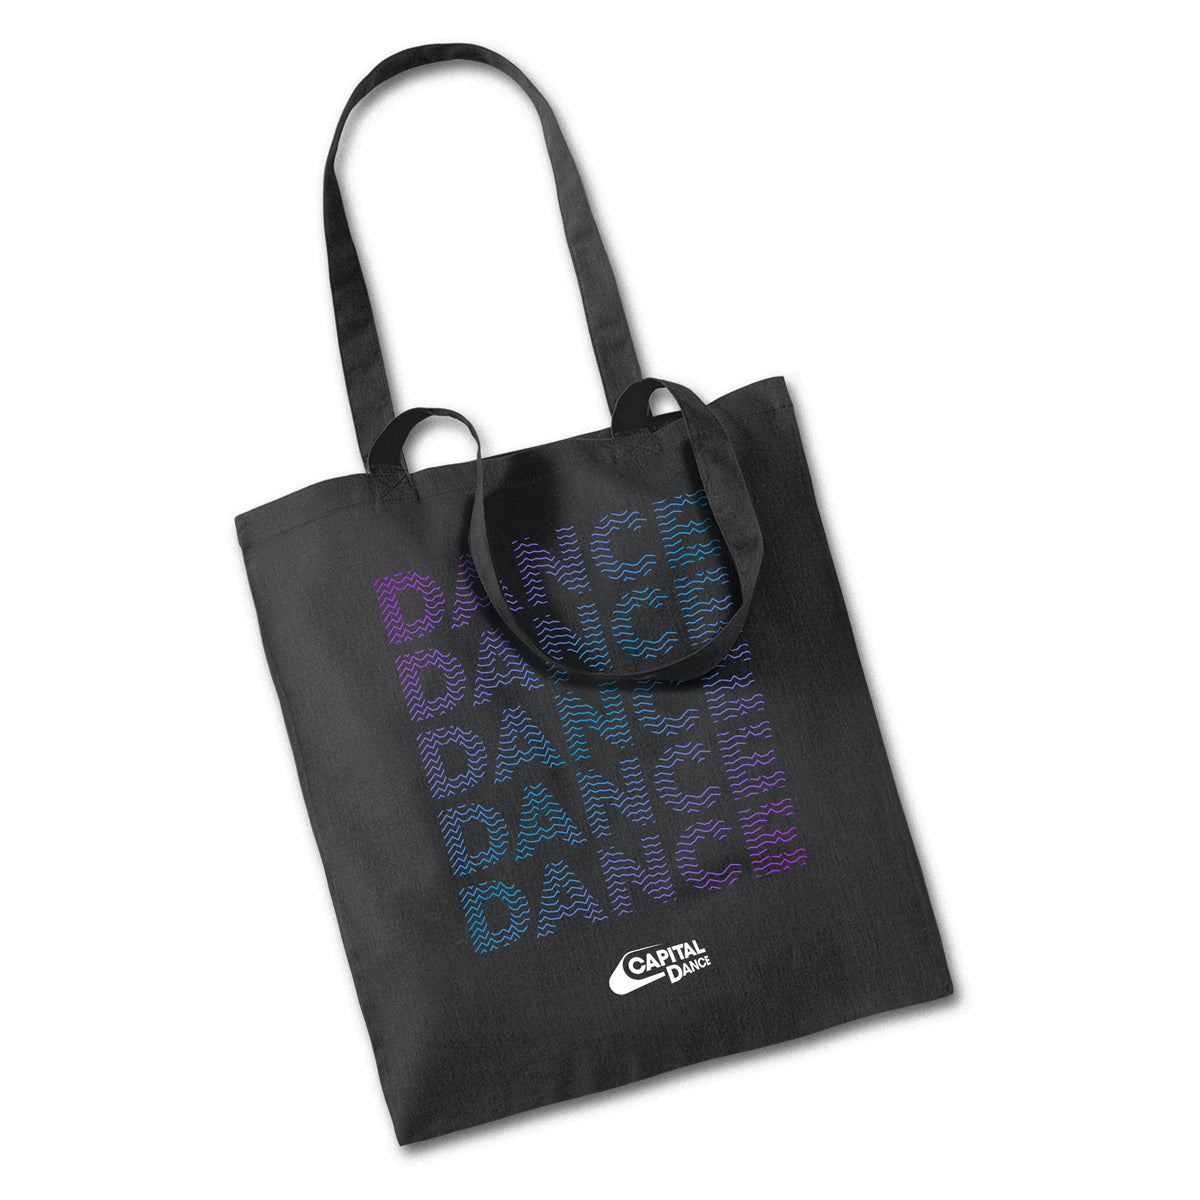 Dance Dance Dance Tote Bag